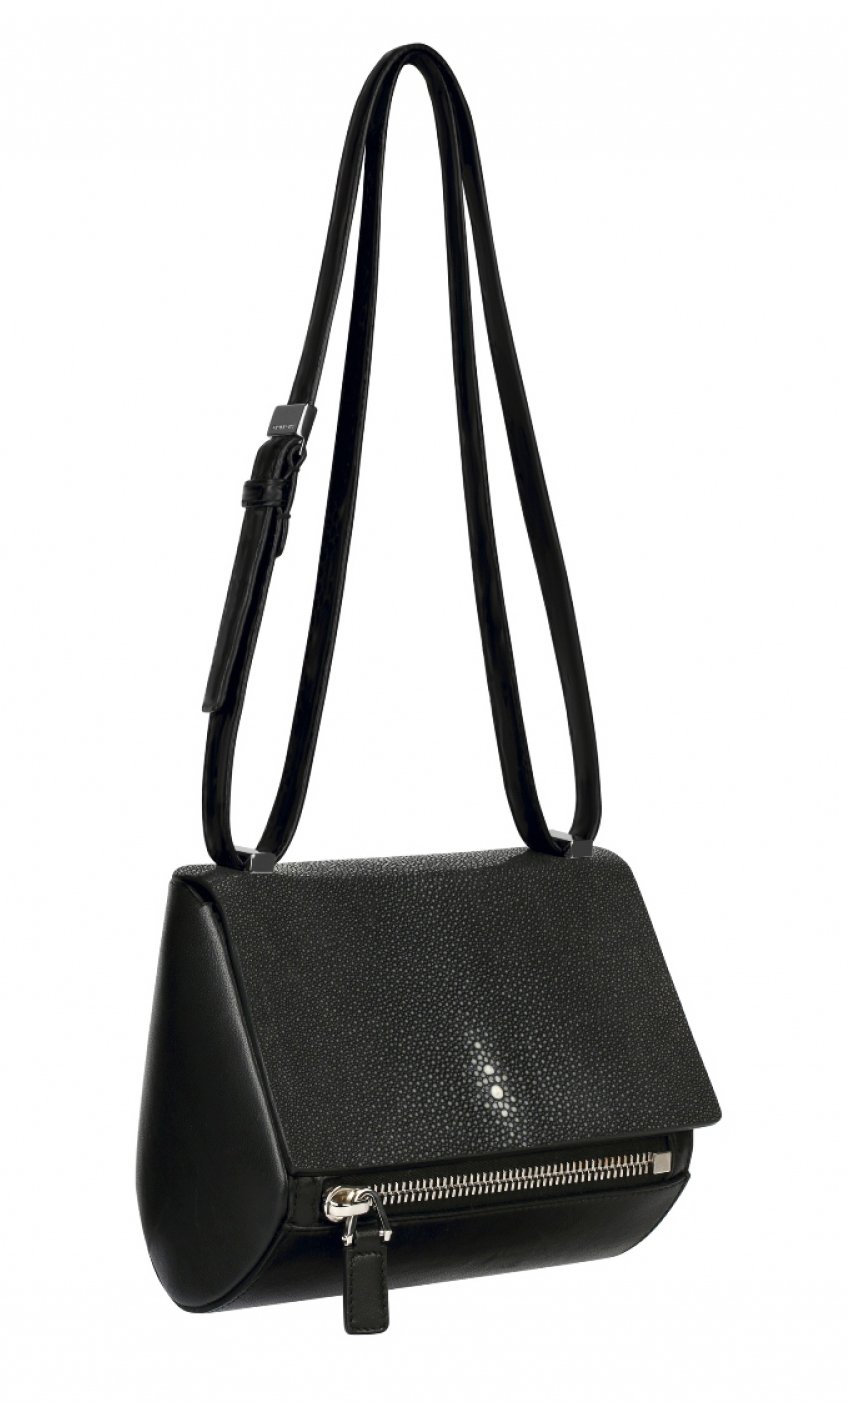 Mini Pandora Box bag in black stingray and nappa leather